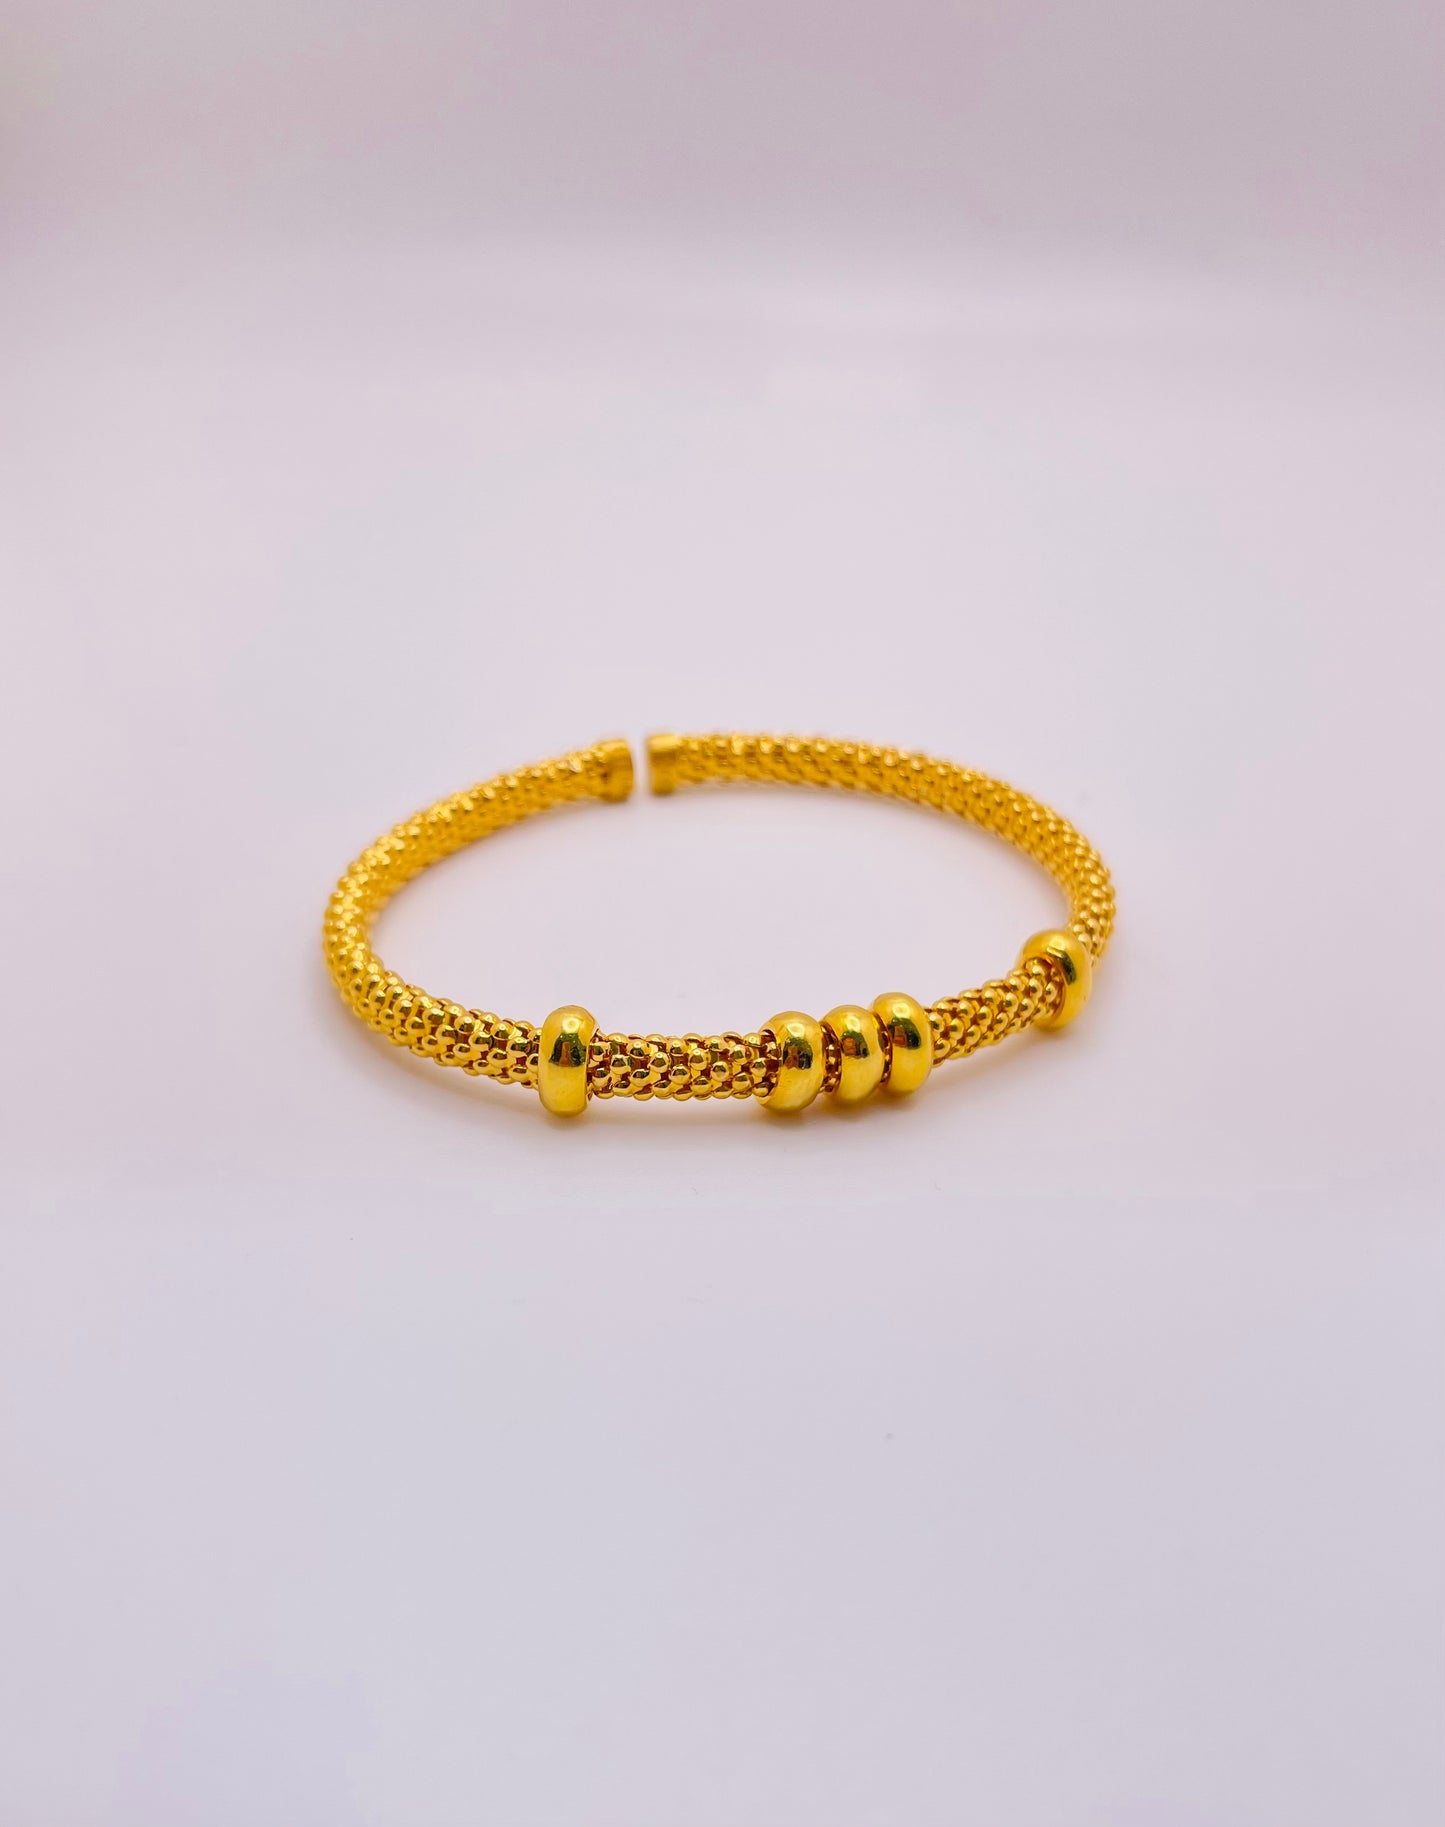 21k Gold Himo Bangle Bracelet